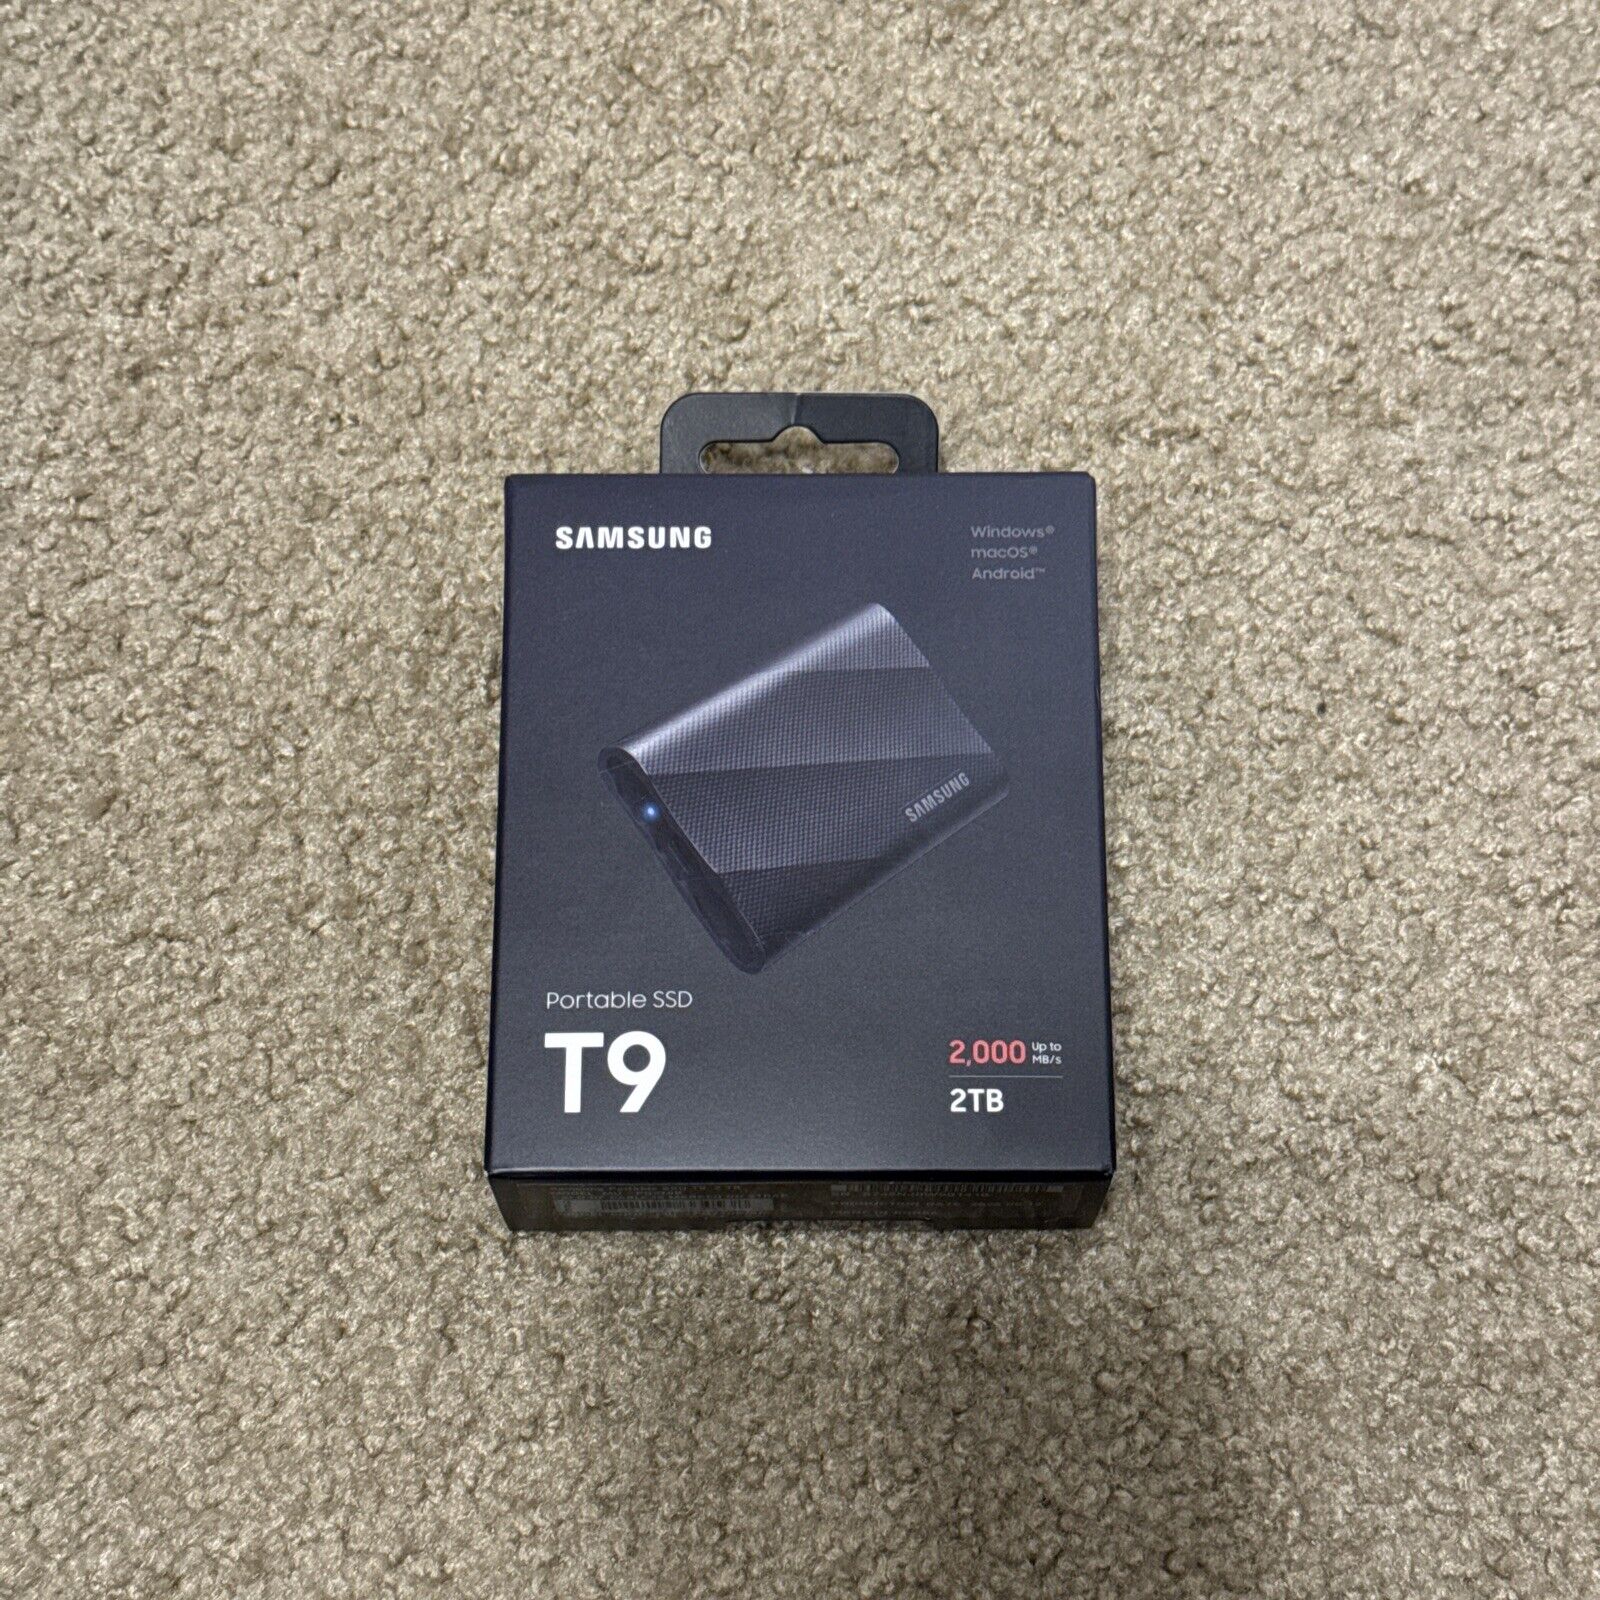 SAMSUNG T9 Portable SSD 2TB, USB 3.2 Gen 2x2 External Solid State Drive